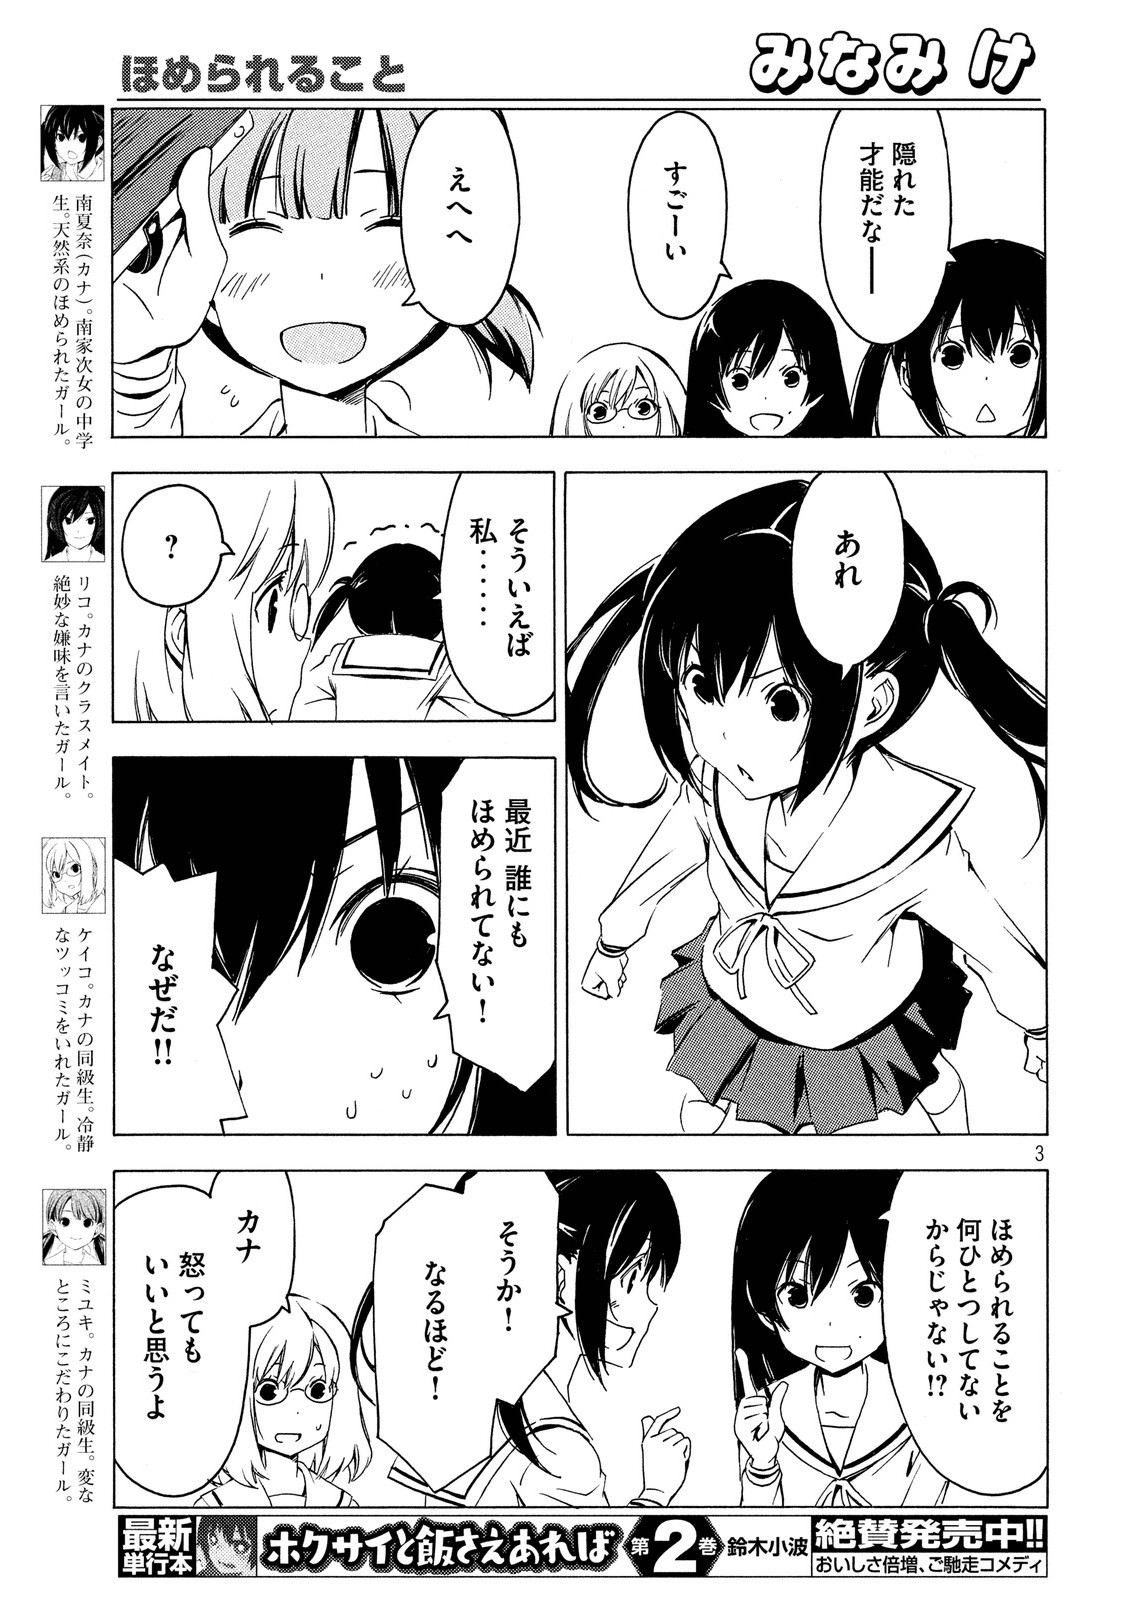 Minami-ke - Chapter 281 - Page 3